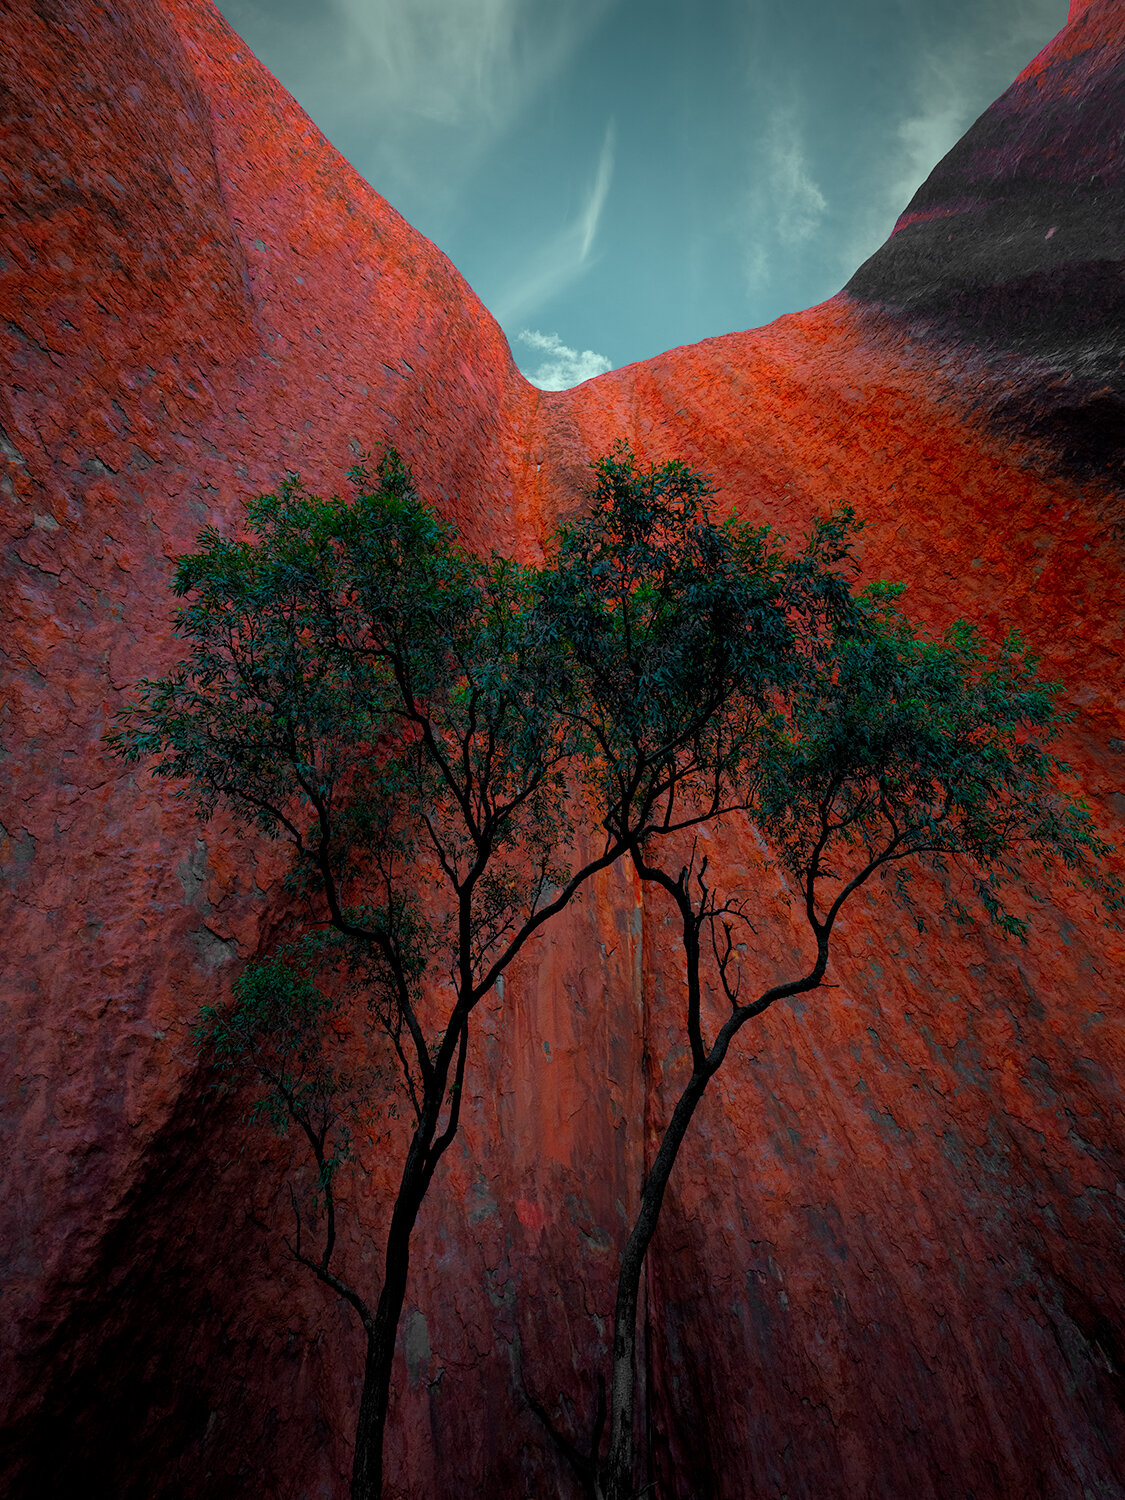 Arkosic Monolith: Category - Trees